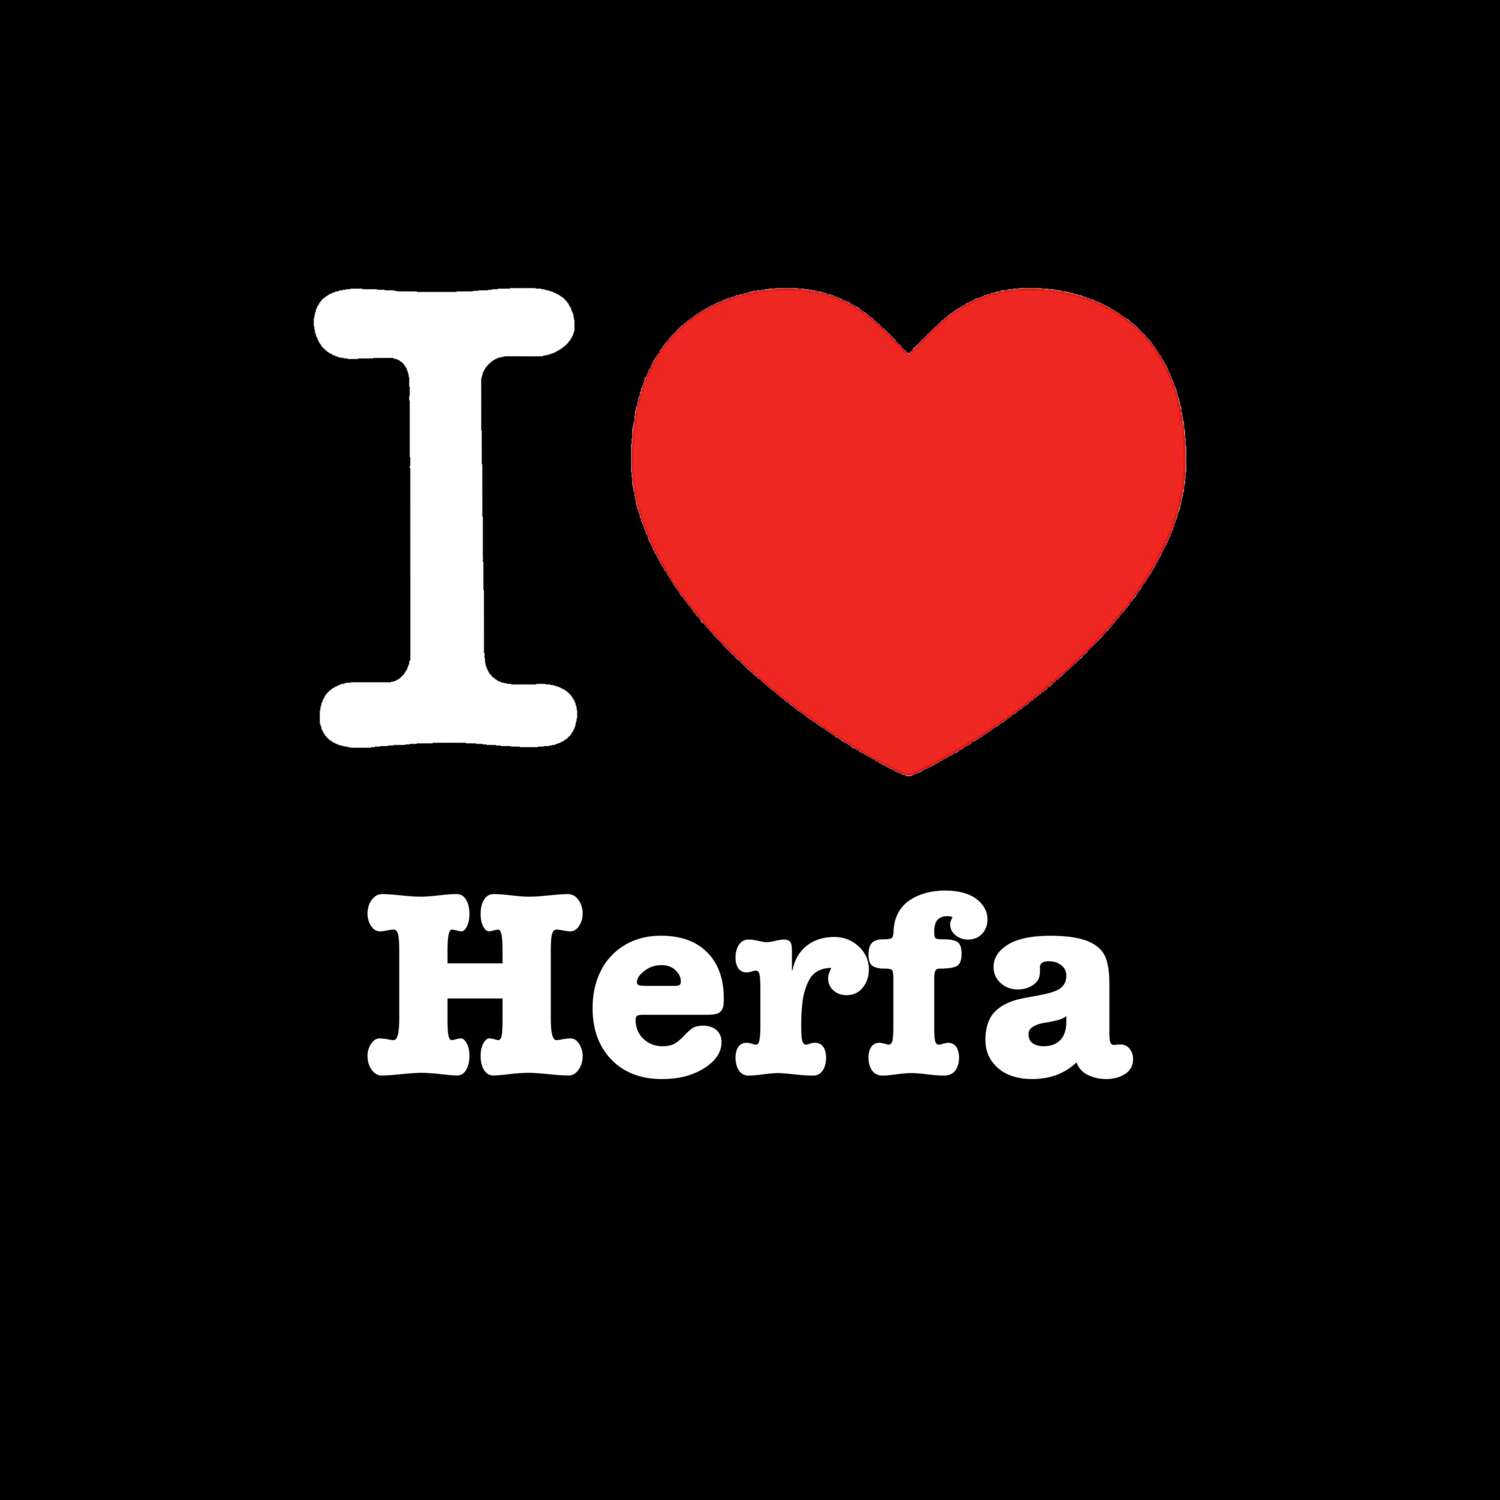 Herfa T-Shirt »I love«